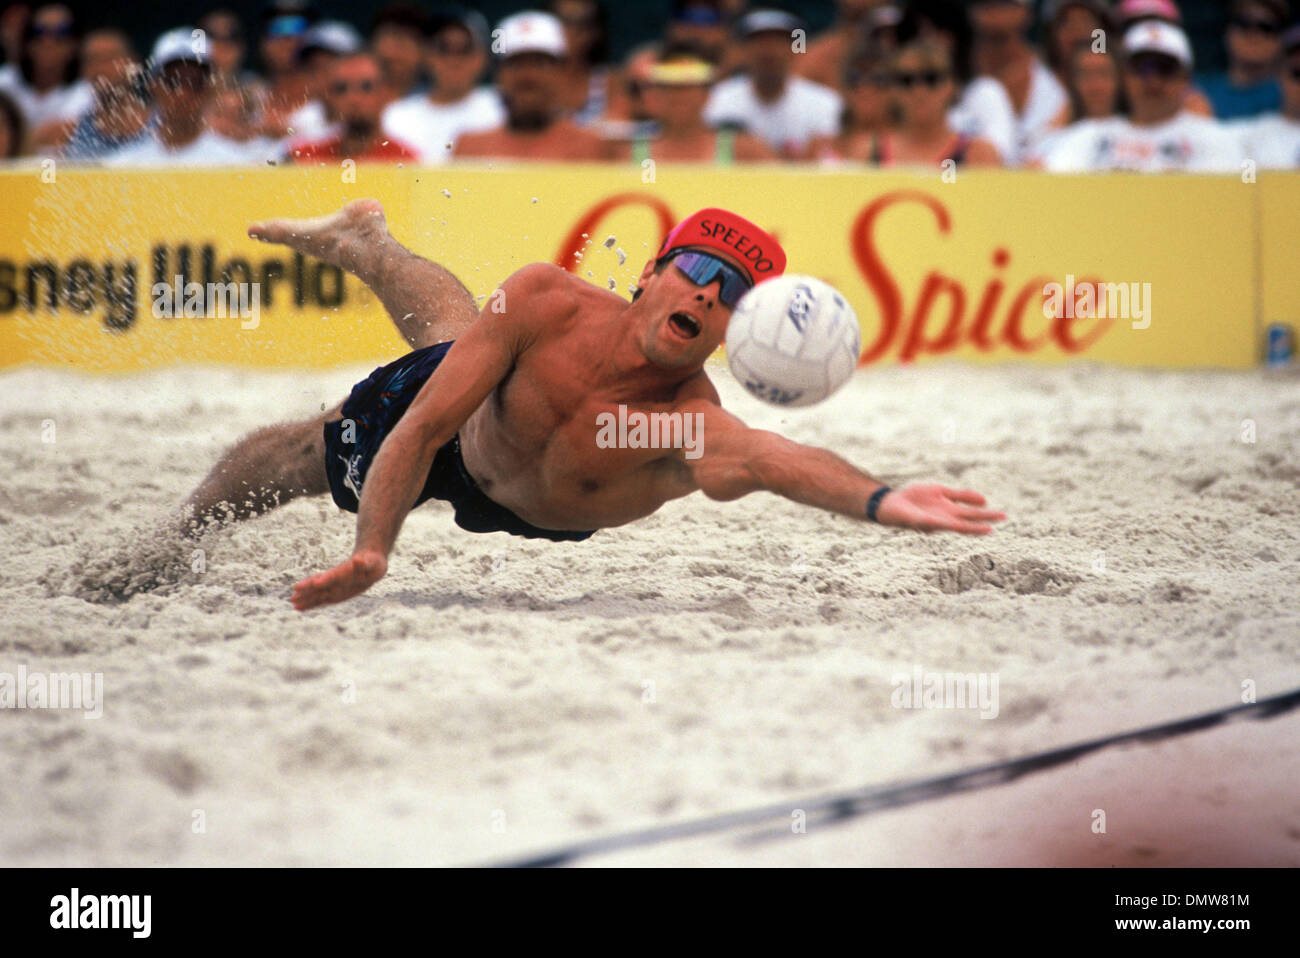 Aug 05, 1994; Orlando, FL, USA; KARCH KIRALY at the AVP Professional Beach Volleyball - King of the Beach - Orlando, FL - 1994. Stock Photo